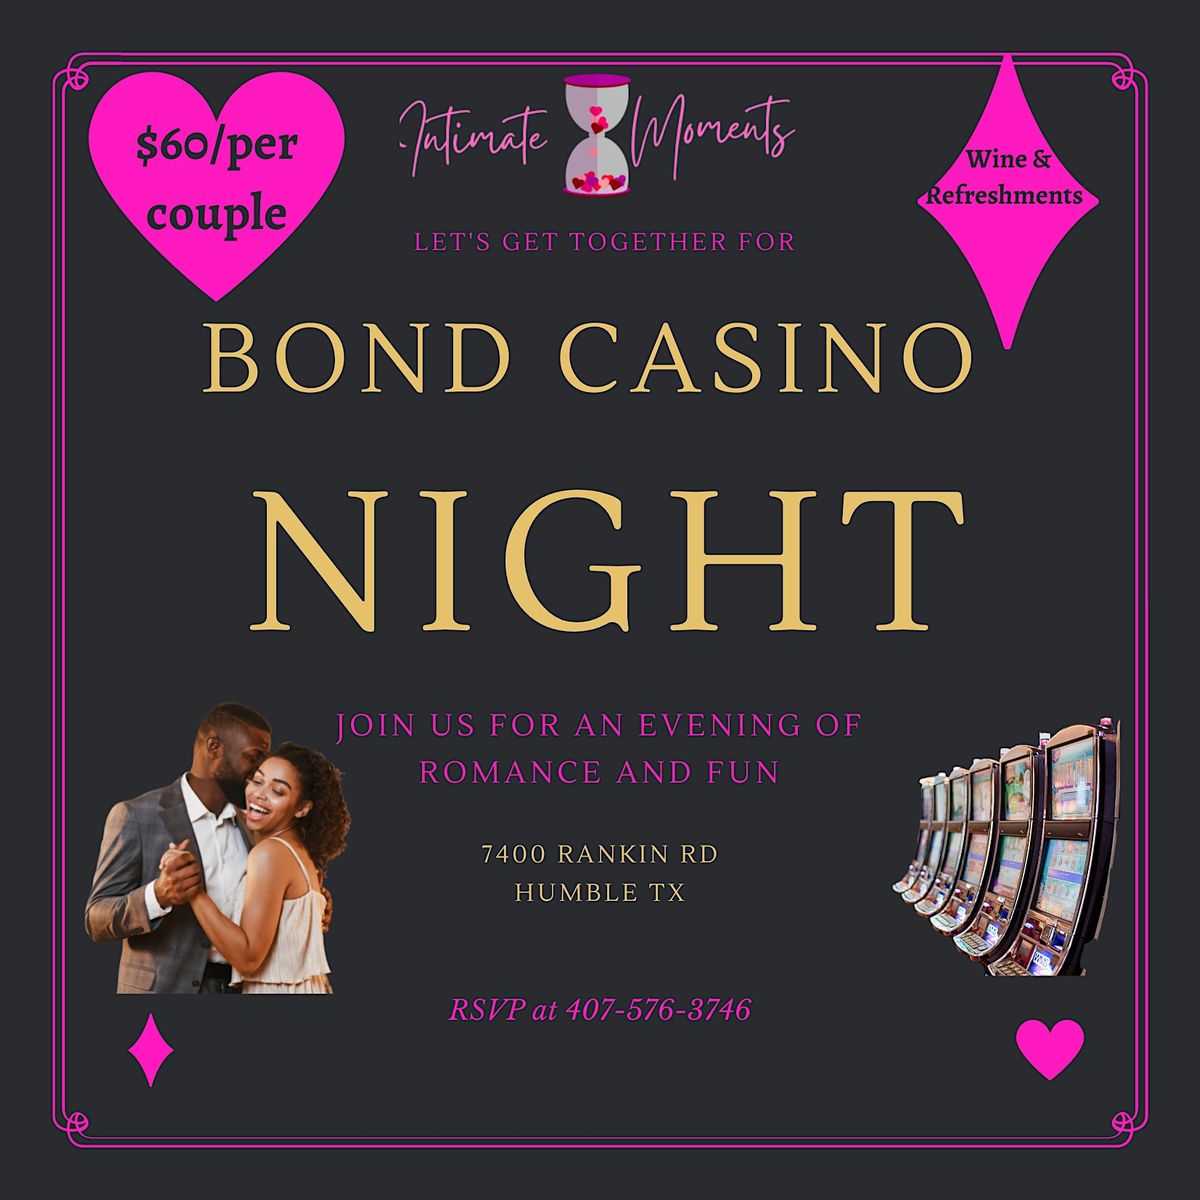 Bond Casino Night